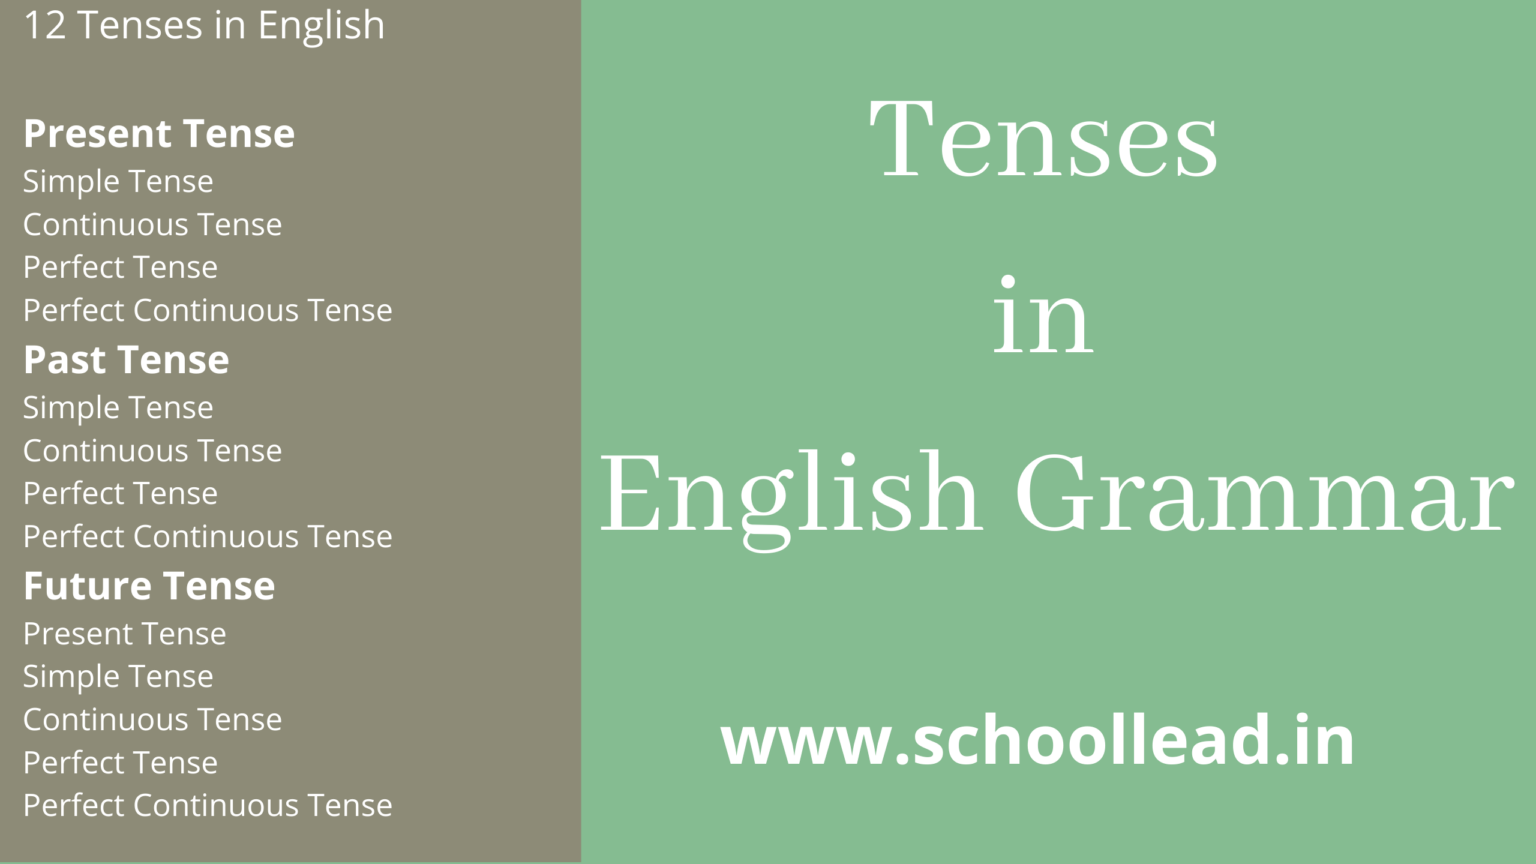 tenses-in-english-grammar-tenses-school-lead